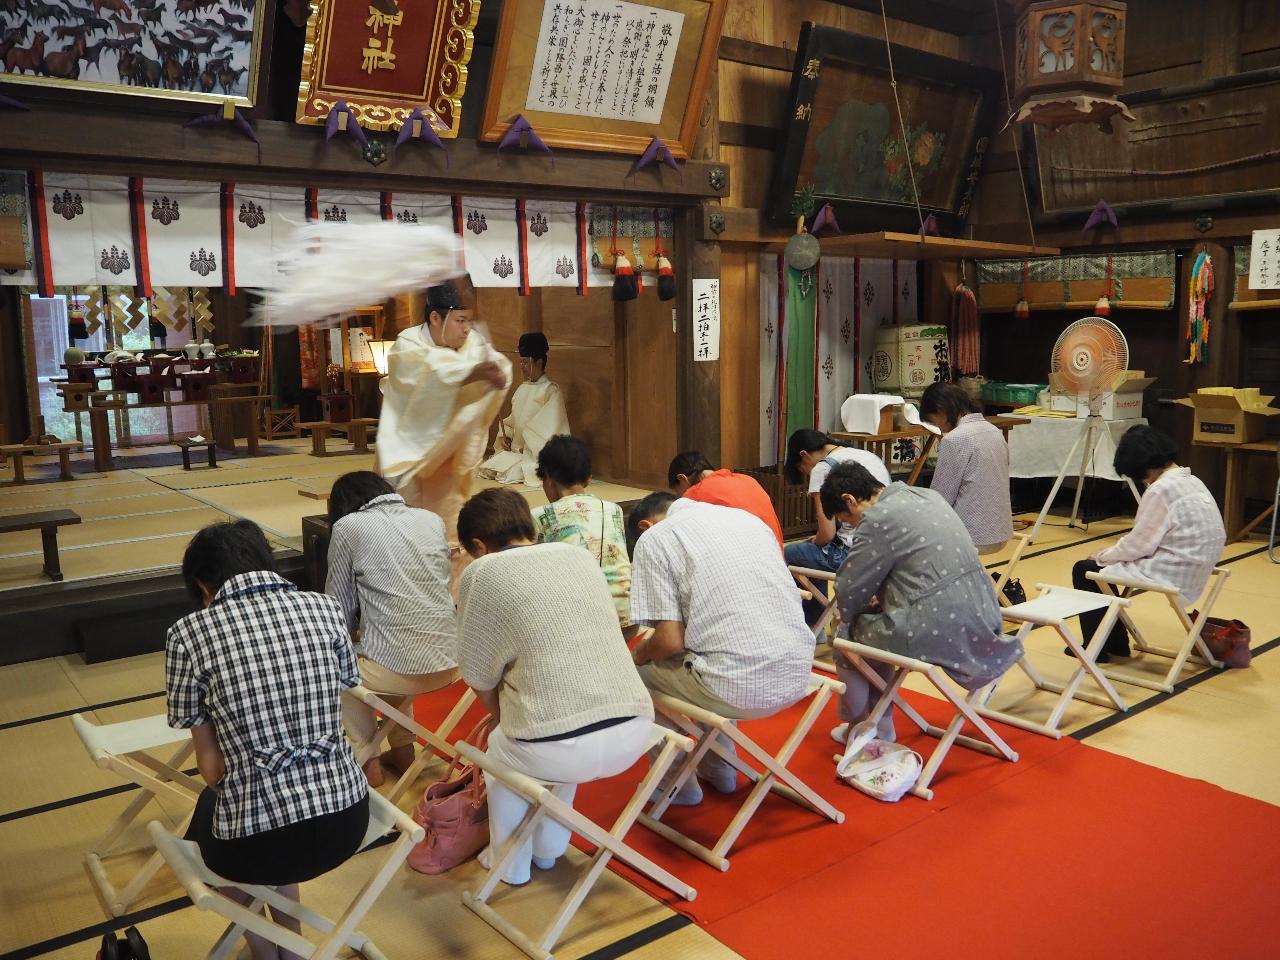 A Trip to Pray for Better Fortune in Echigo Nagaoka